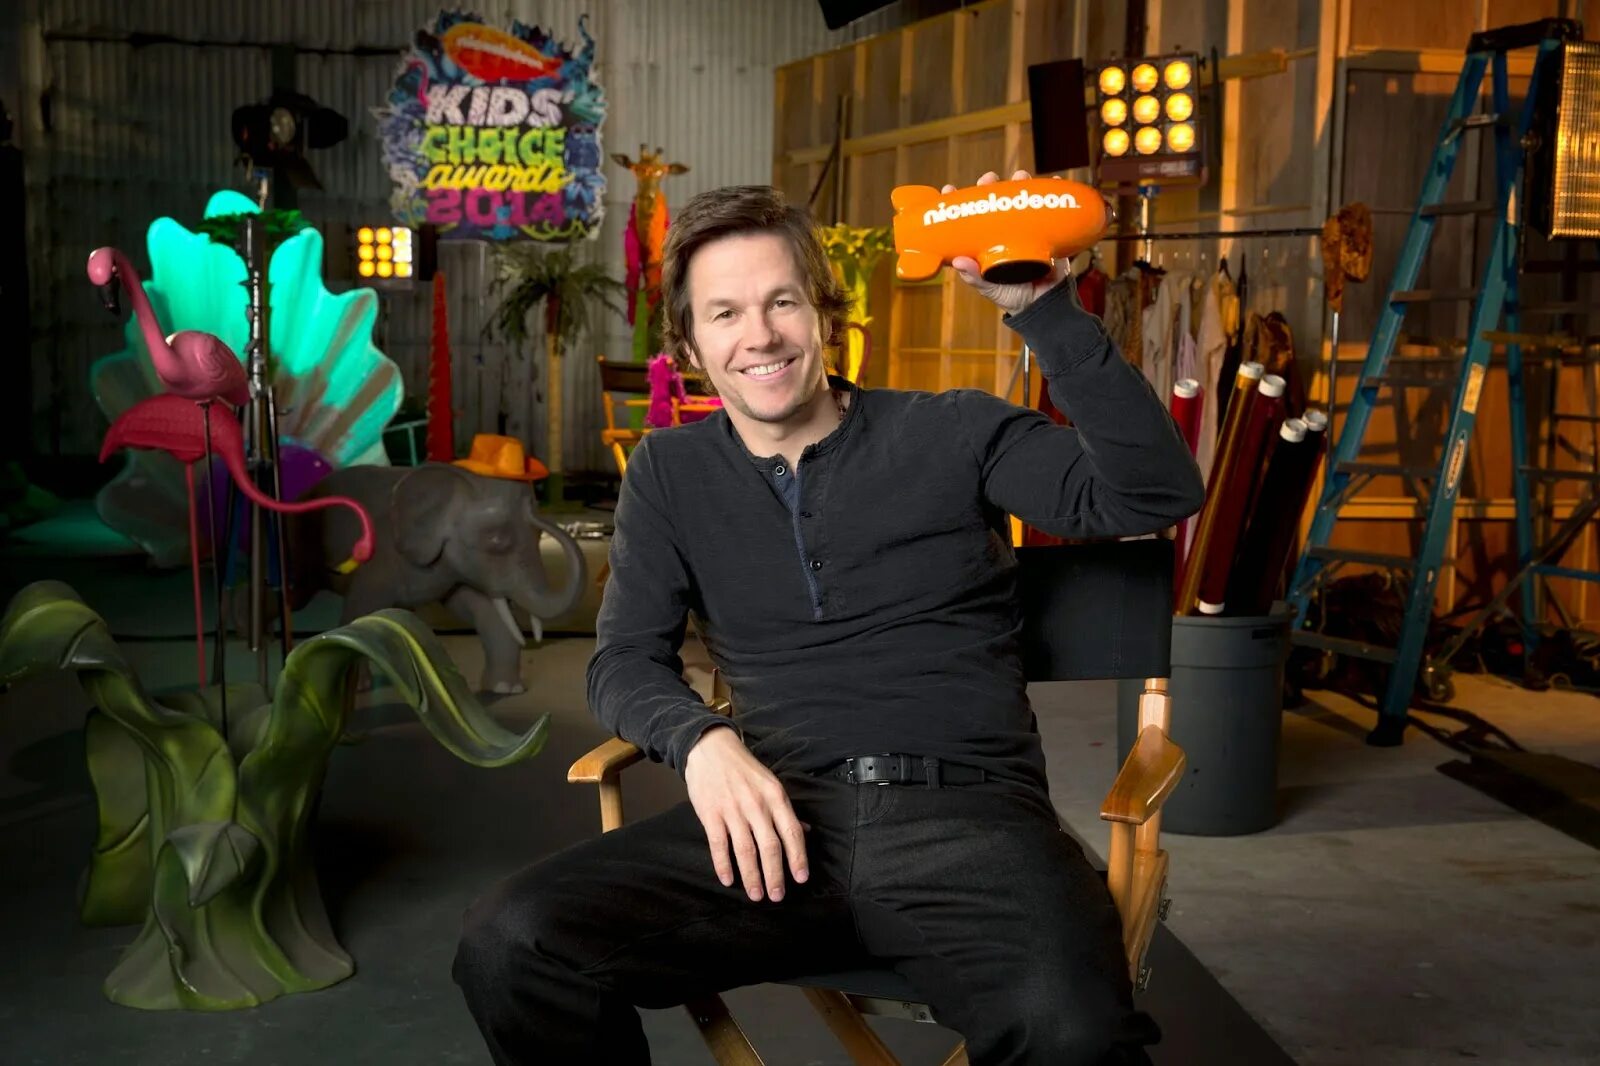 Nick kids. Nickelodeon Kids choice Awards. Kids choice 2021.